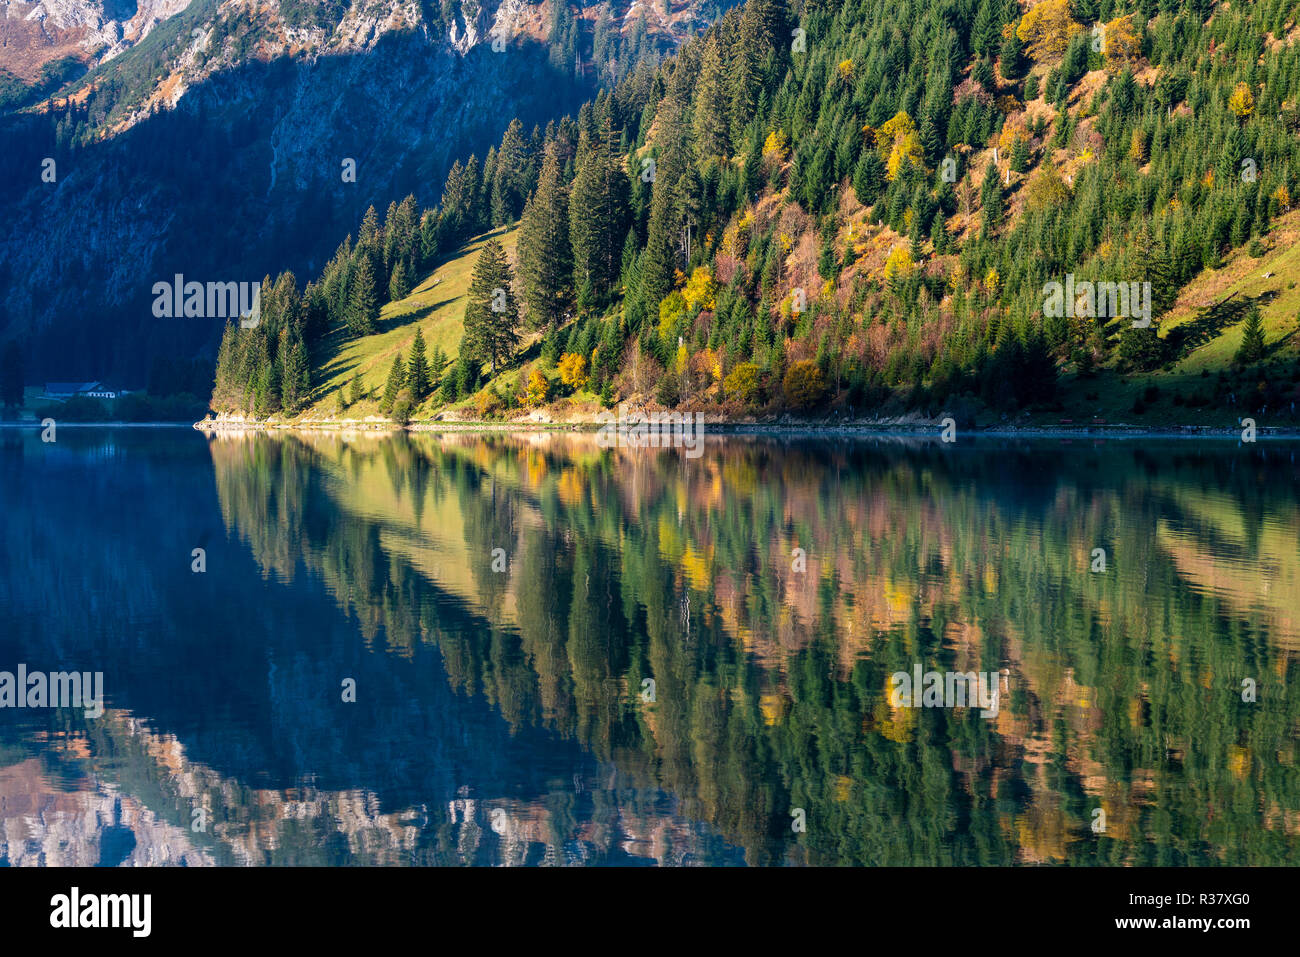 Lake Vilsalpsee, autumn colouring, Allgäu Alps, Tannheimer Tal, Tyrol, Austria Stock Photo